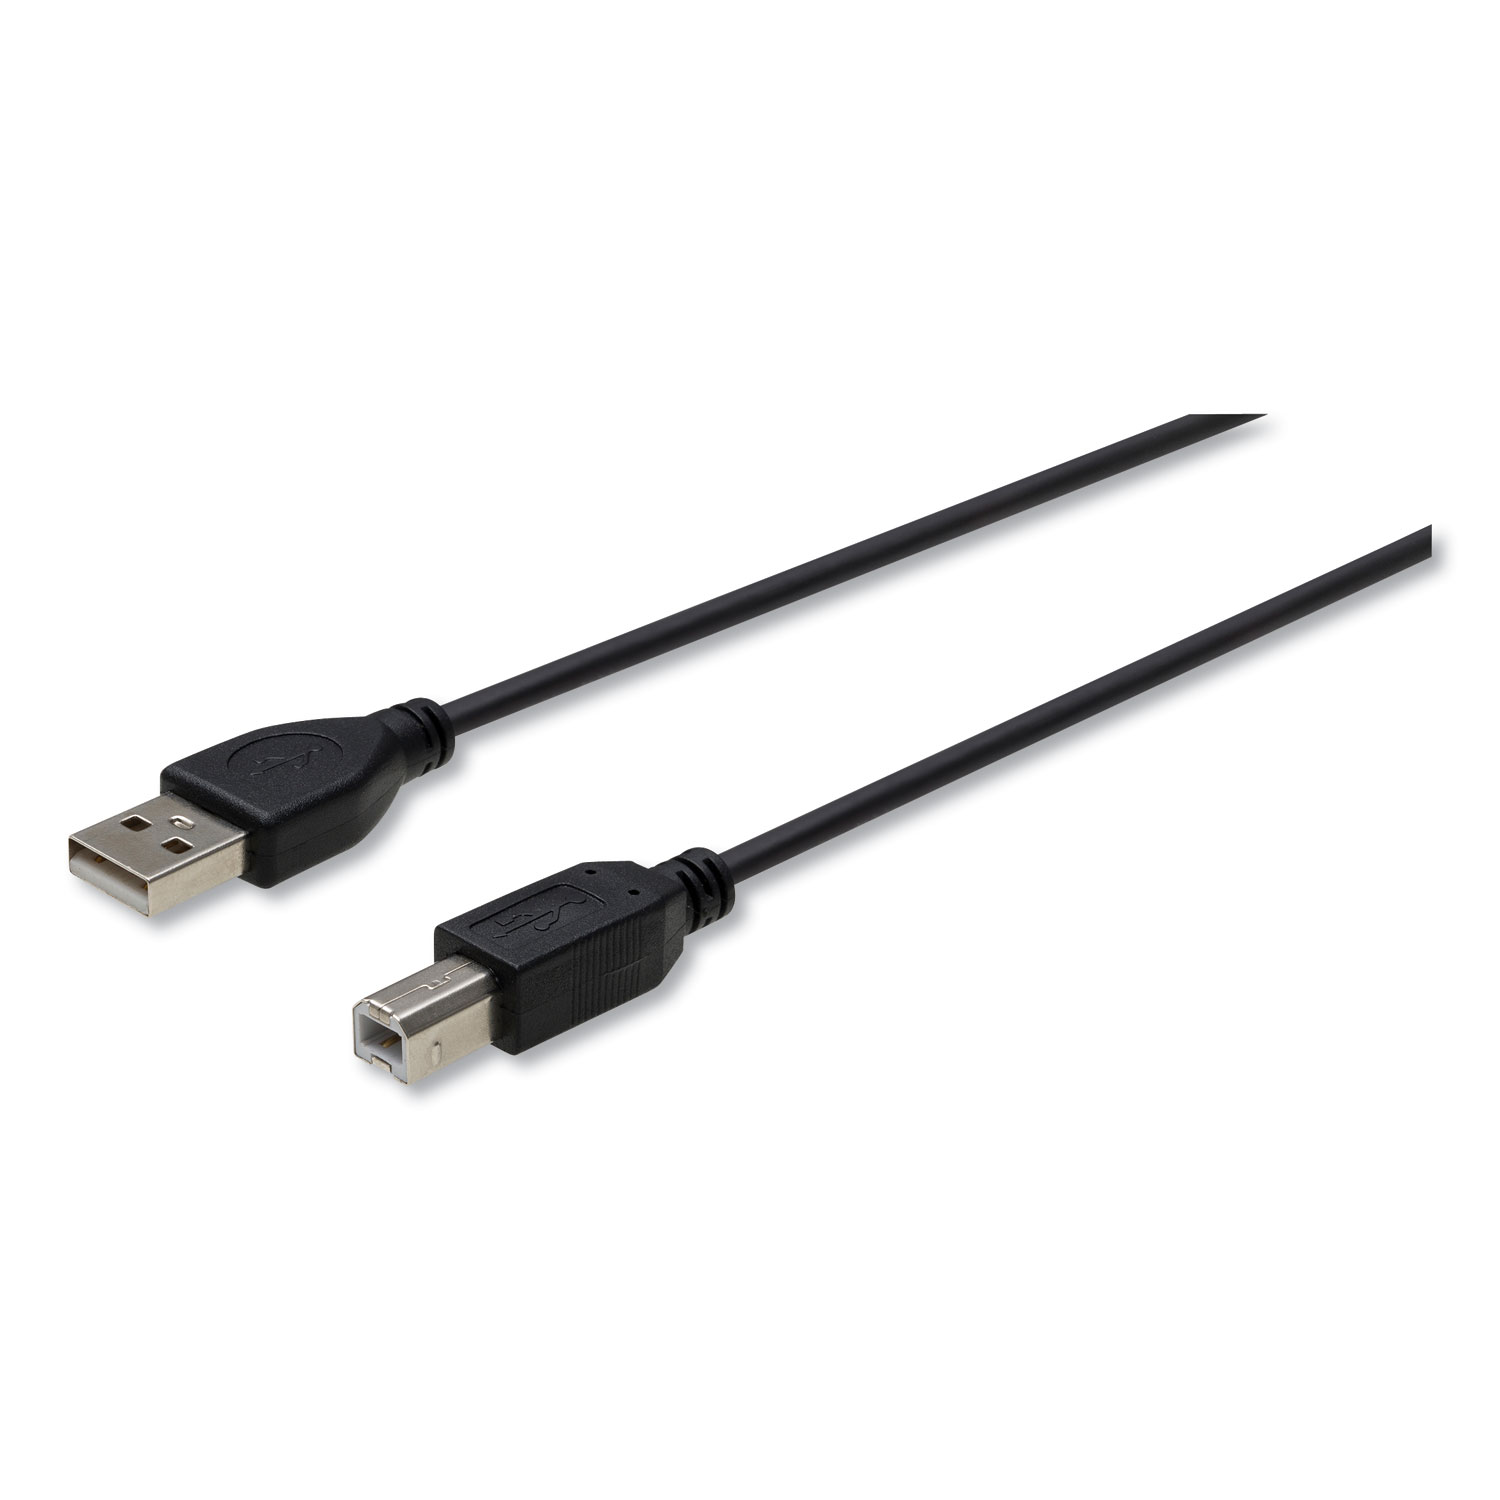  Innovera IVR30000 USB Cable, 6 ft, Black (IVR30000) 